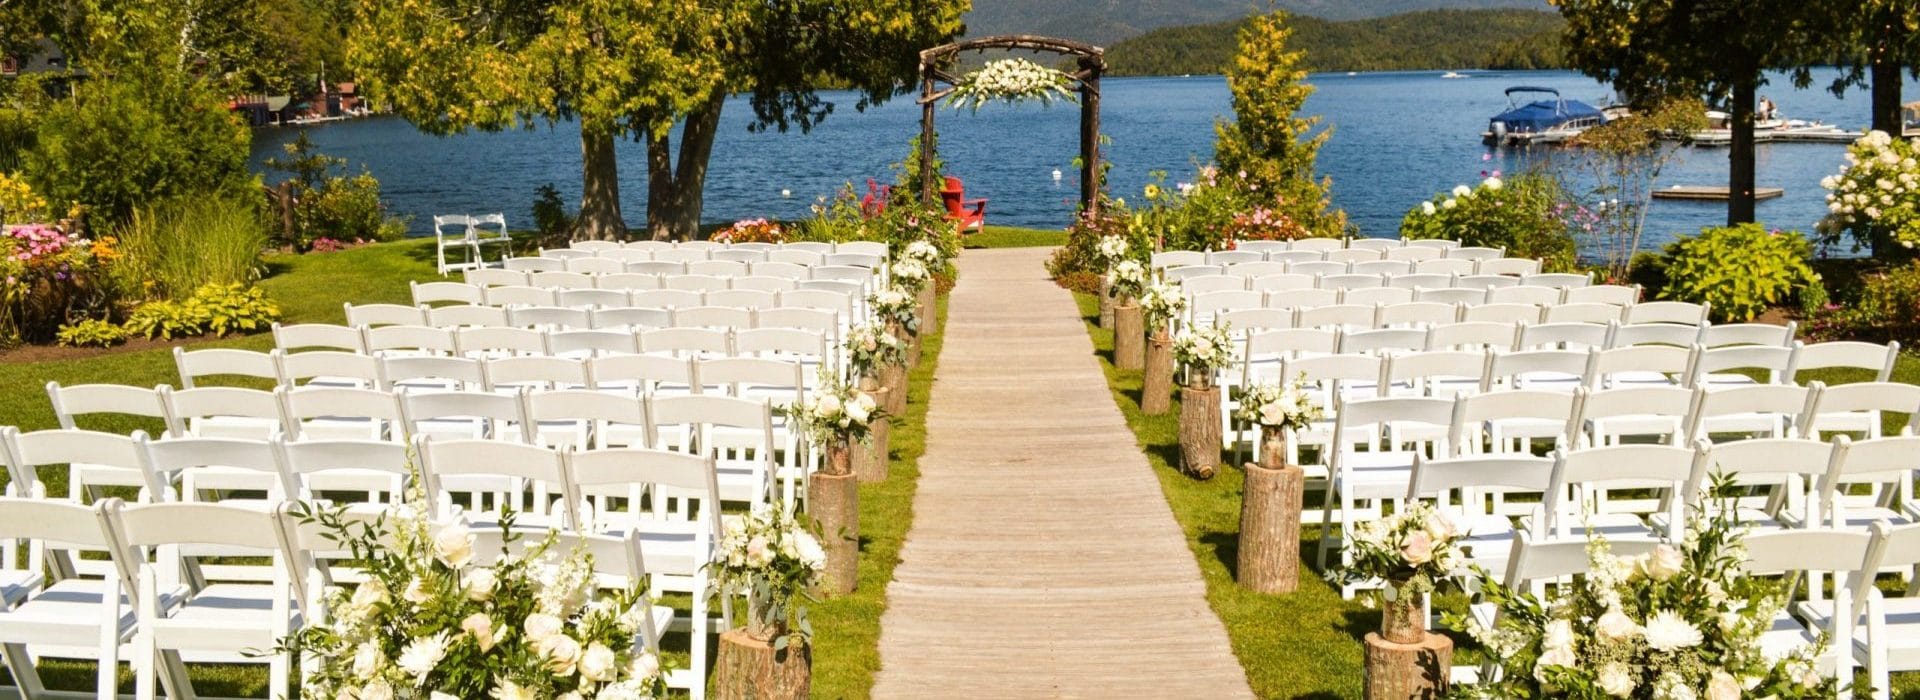 Muchas sillas plegables blancas en boda